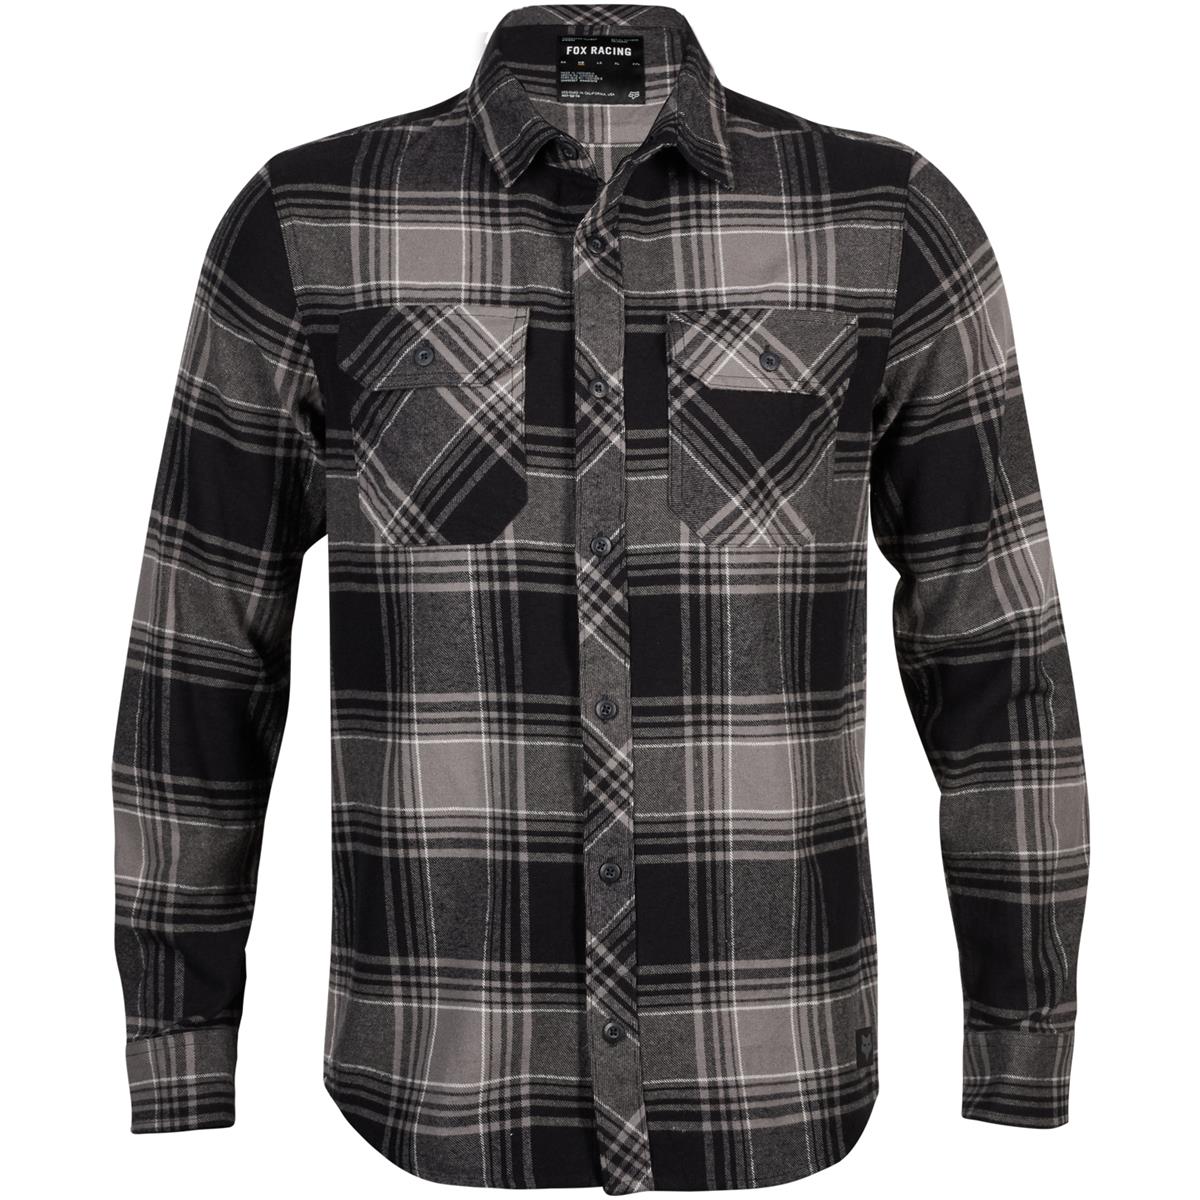 Fox Flannel Shirt Long Sleeve Legion Traildust - Black